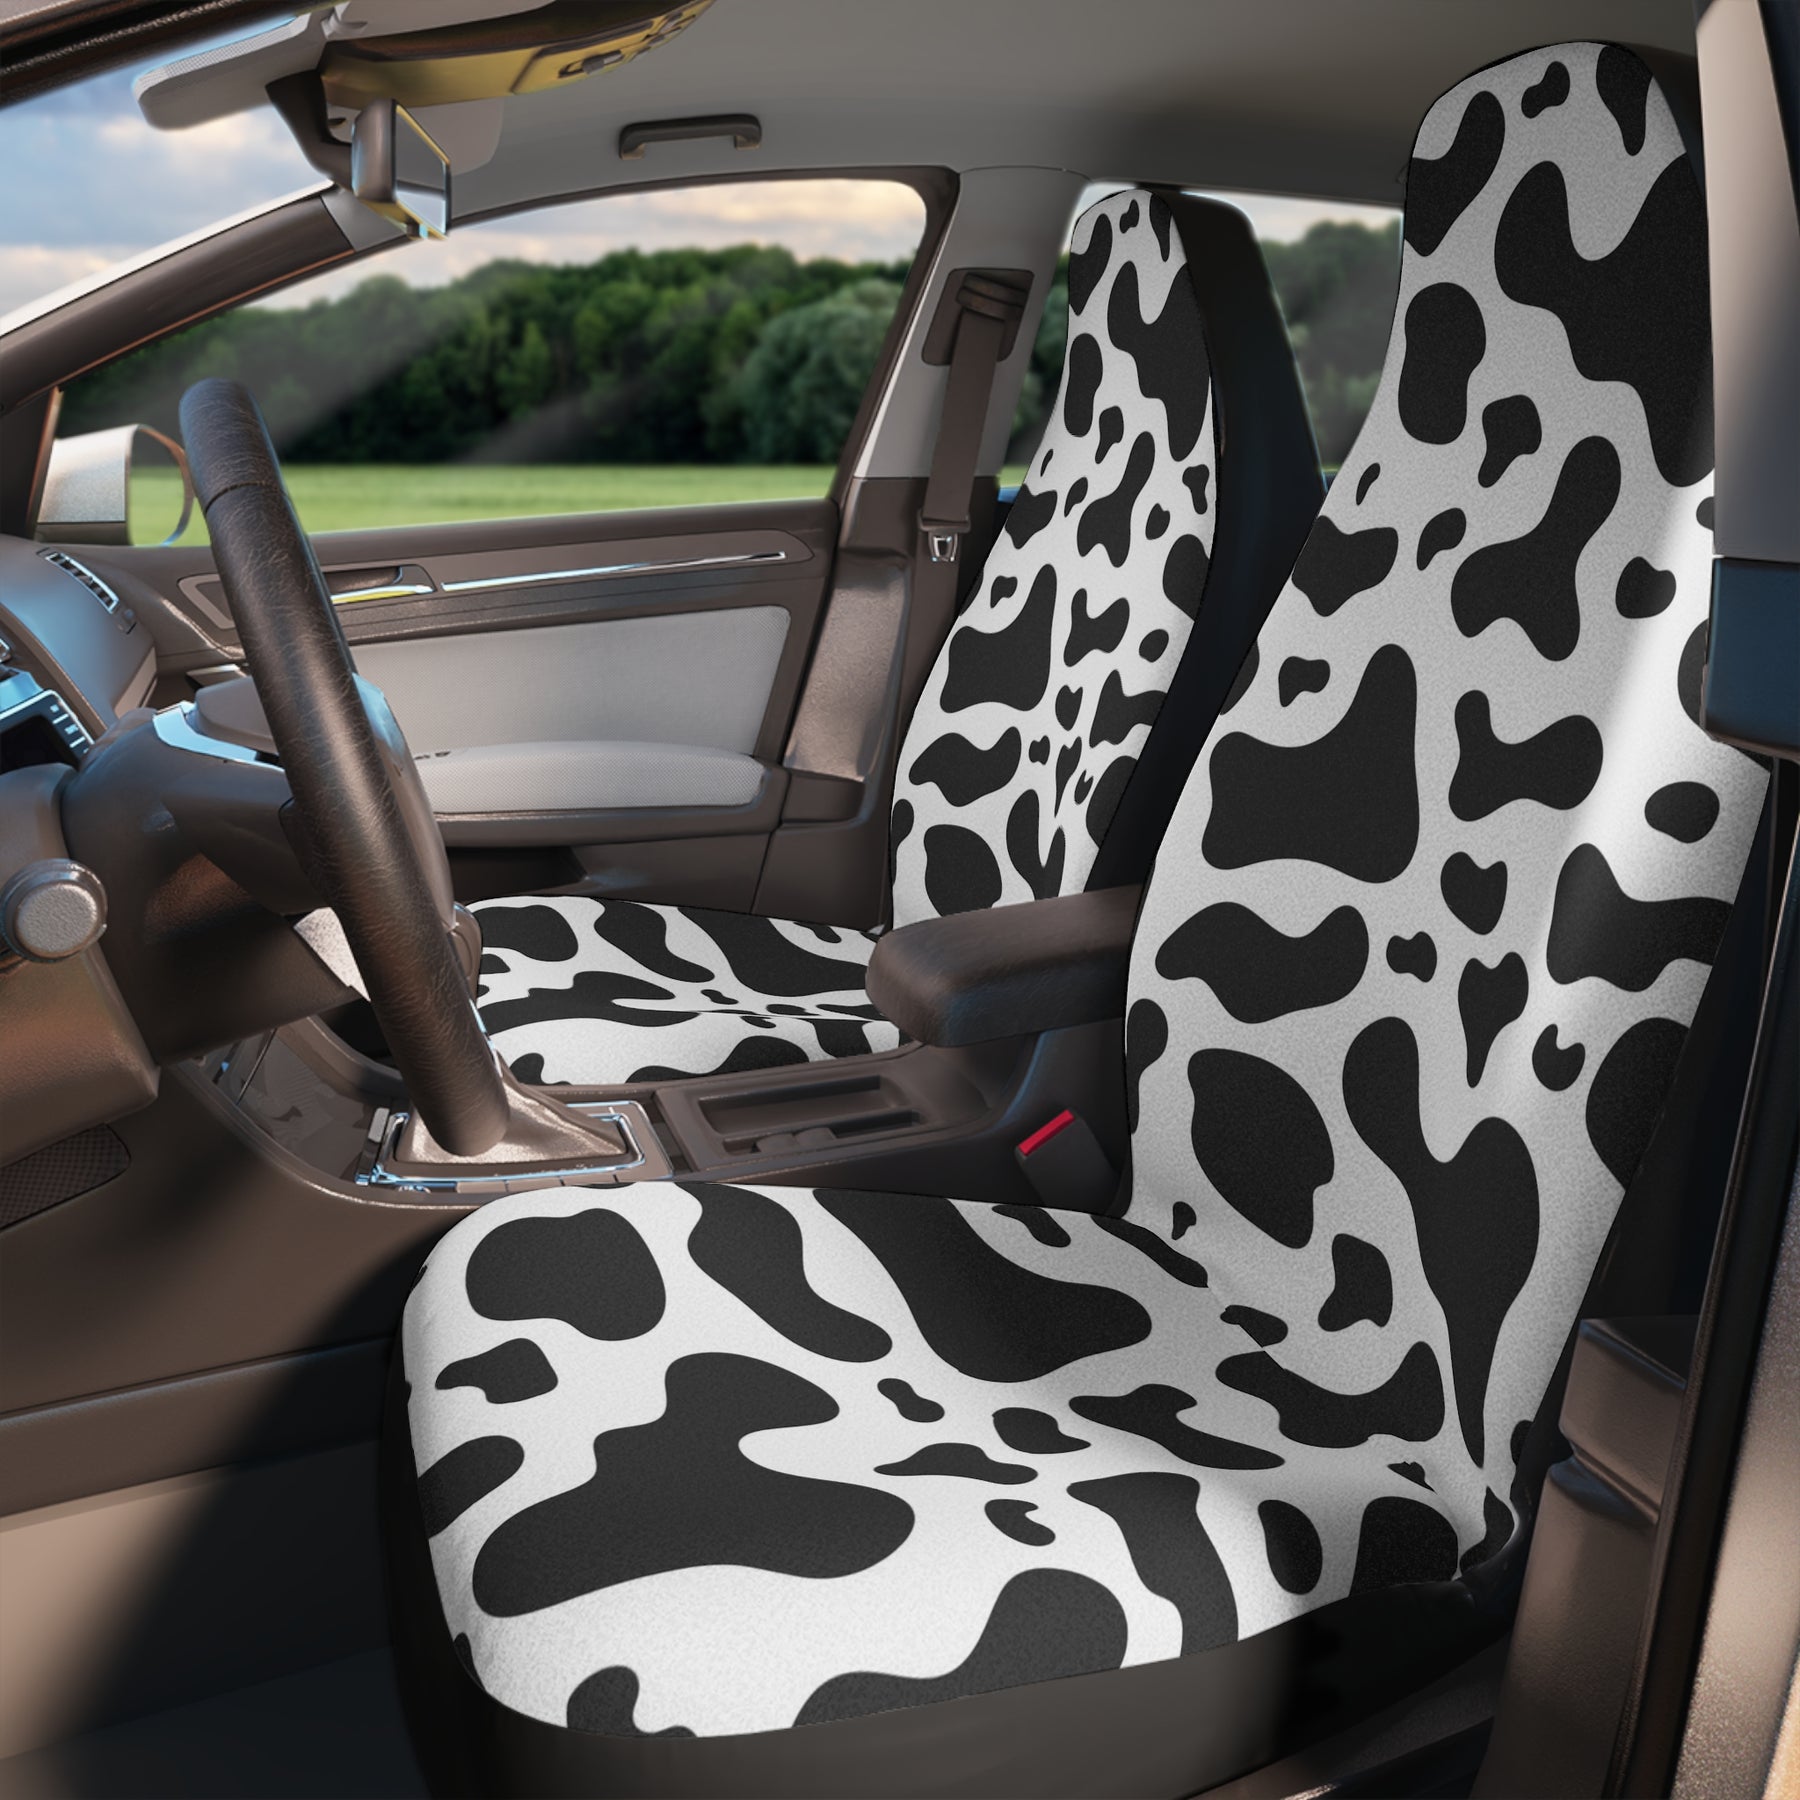 Animal print Car Front Seat Covers Set,Cow skin pattern Car Seat Covers,Cute Car Decor,kawaii car accessory,minimalist interior car decor